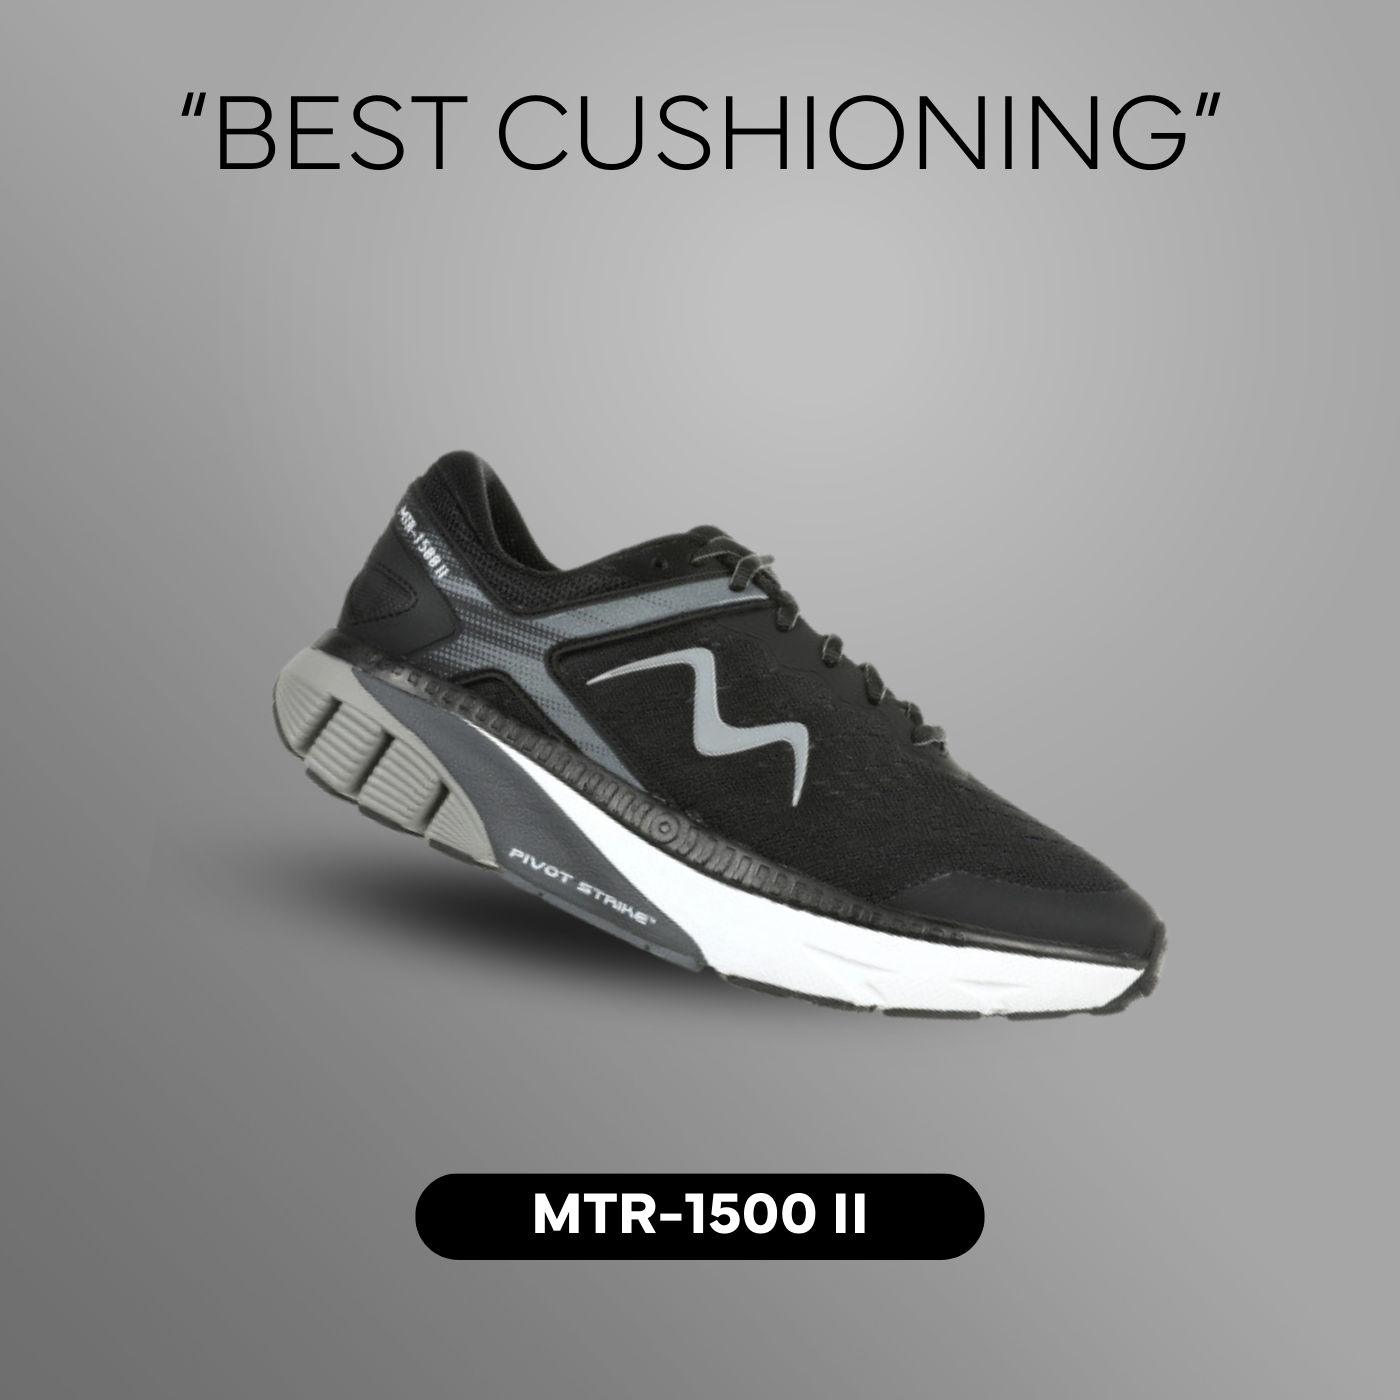 Health Magazine Calls the MTR-1500 II Best Cushioning Shoe for Plantar Fasciitis.